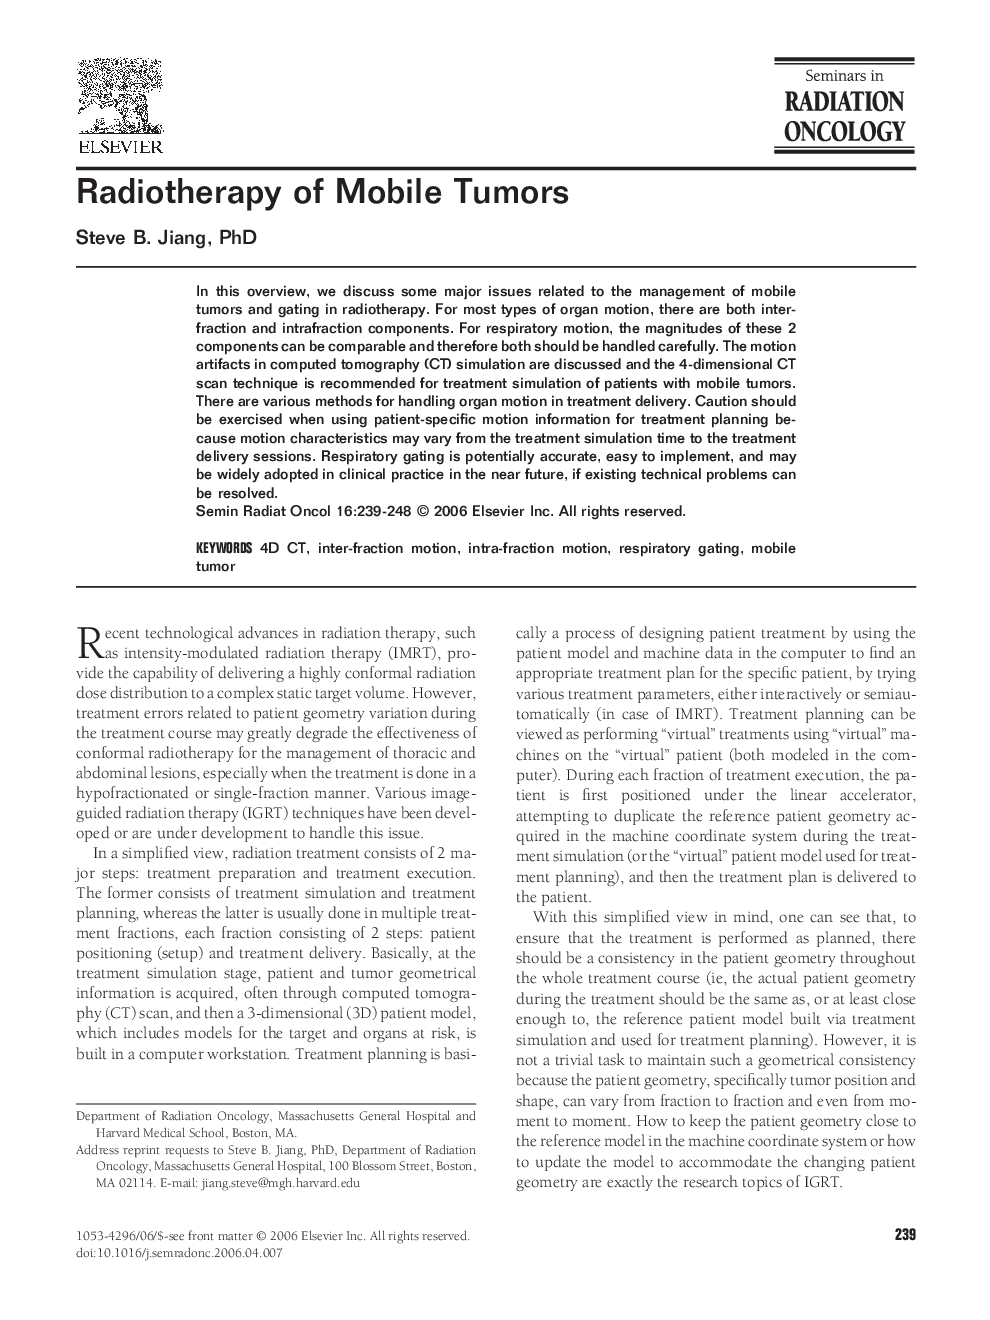 Radiotherapy of Mobile Tumors